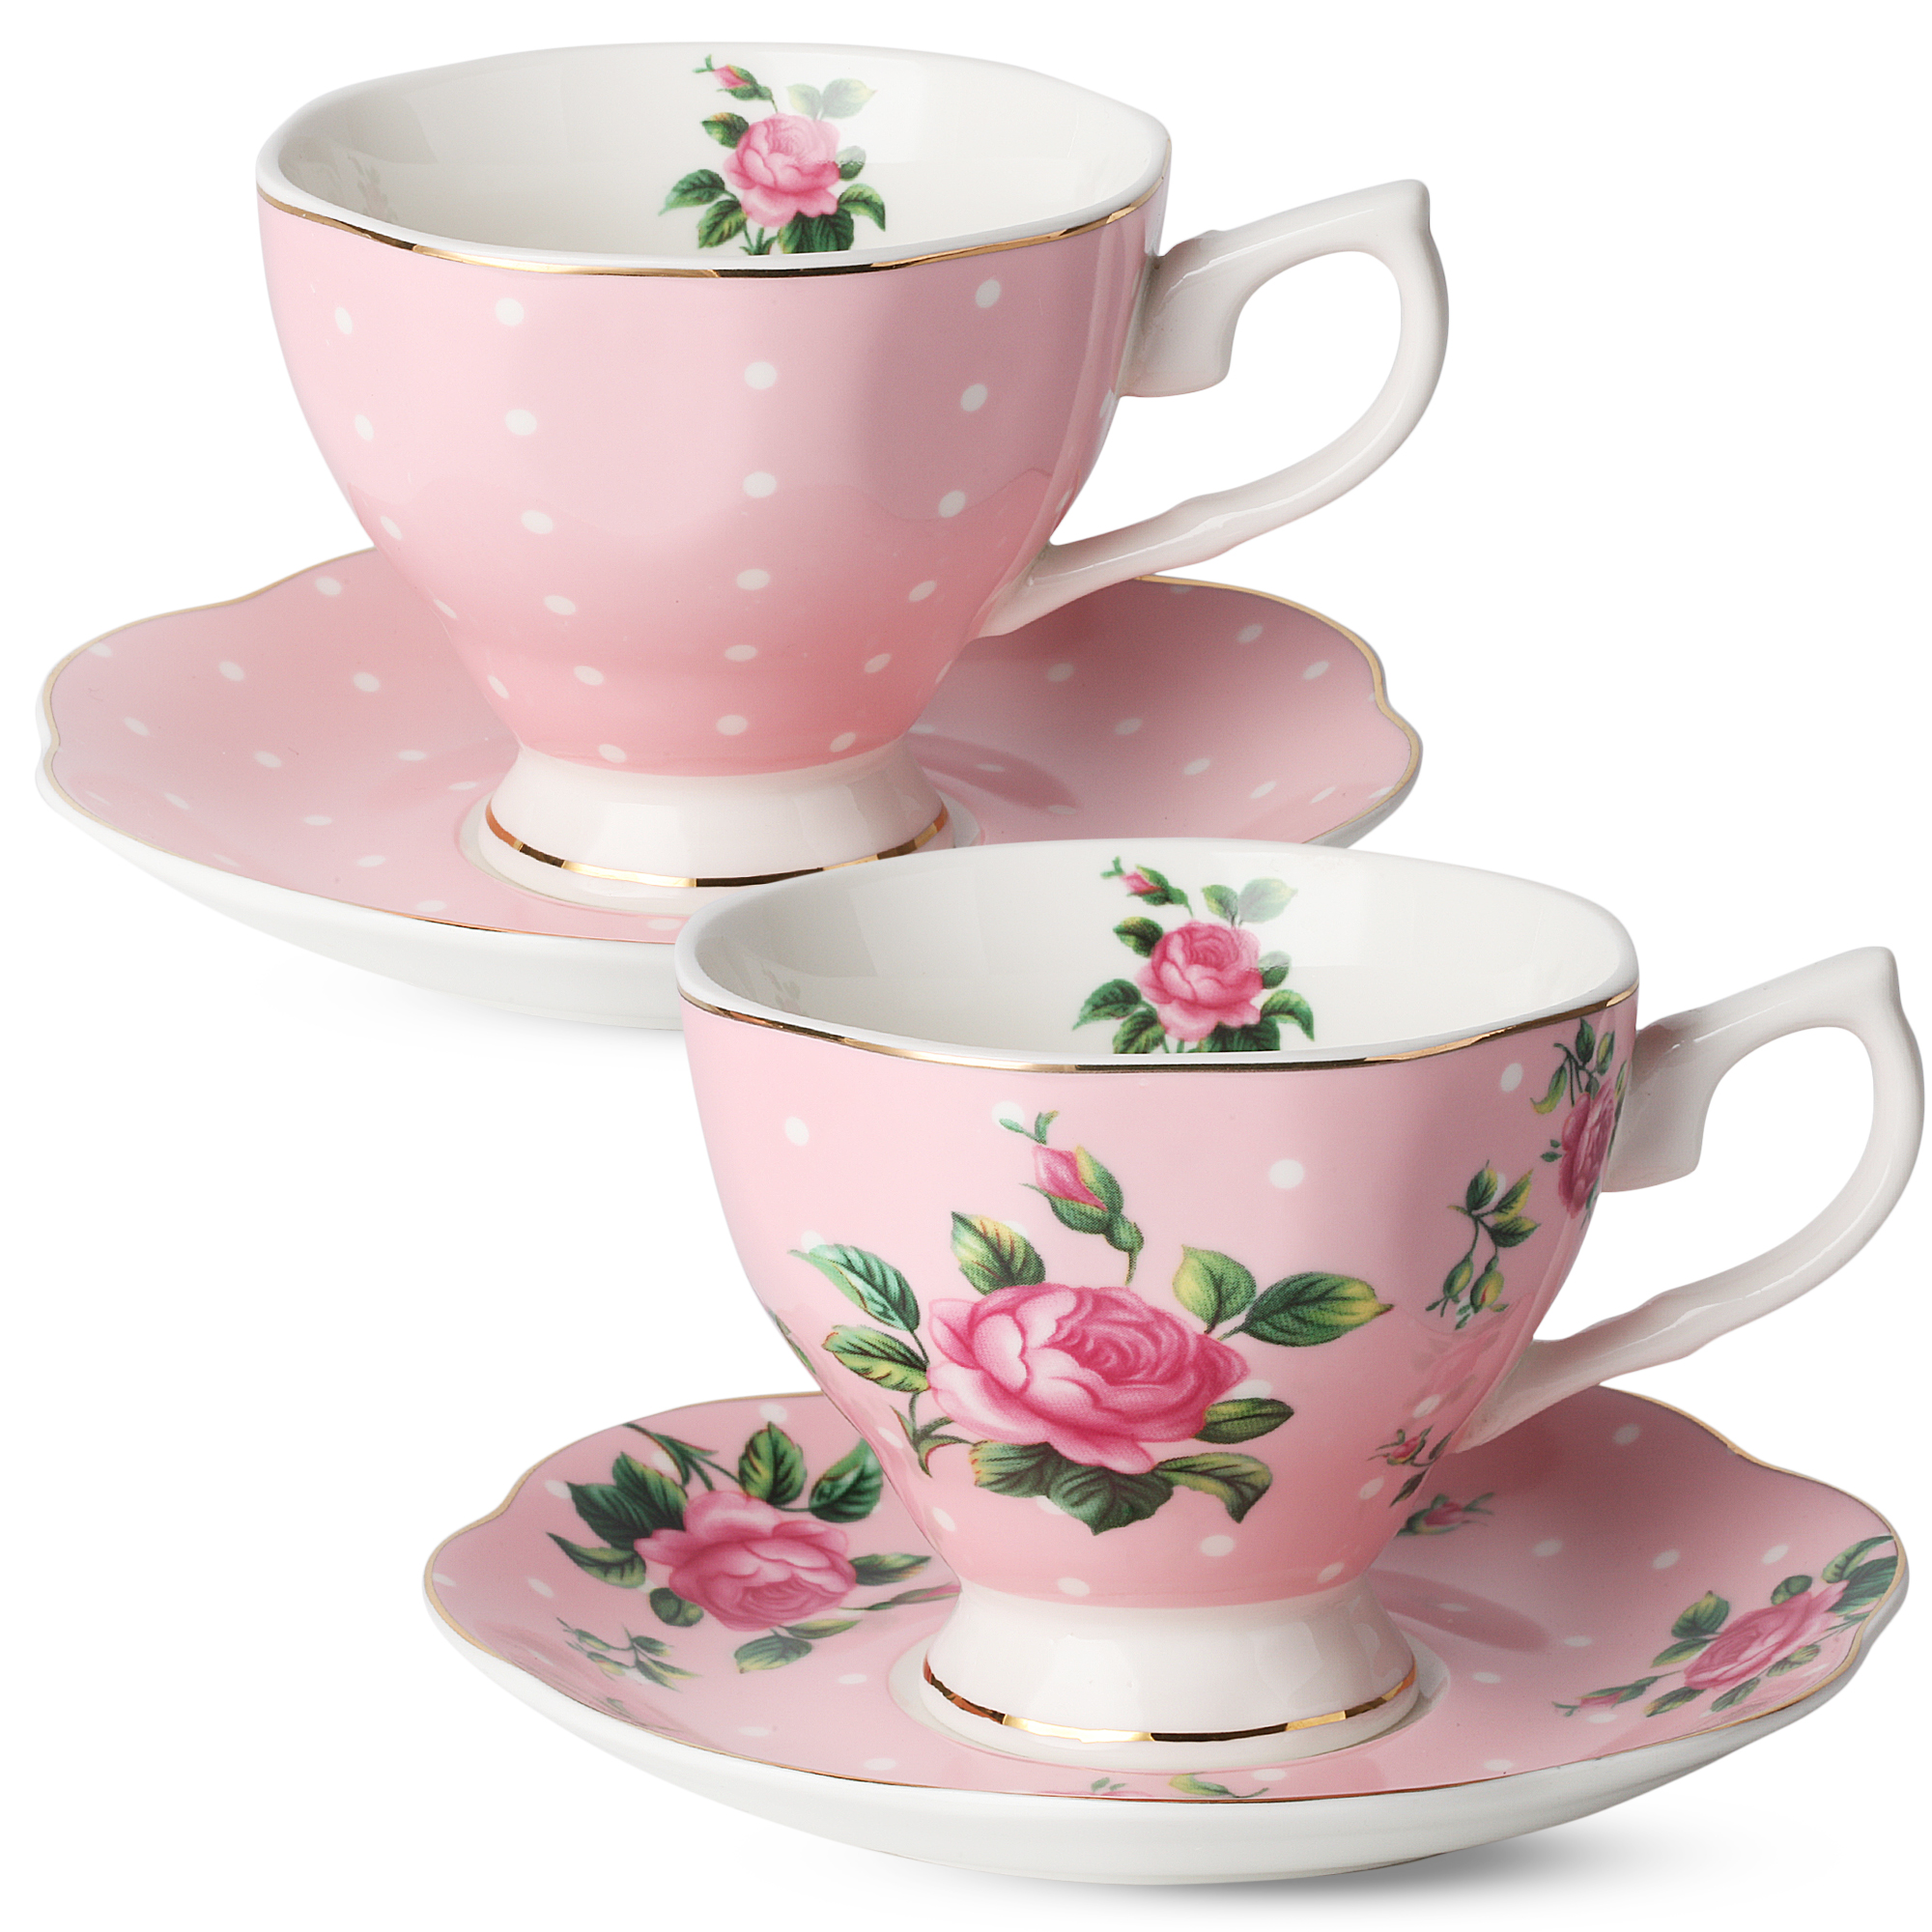 BTäT- Floral Tea Cups and Saucers (Pink – 8 oz) – BTAT